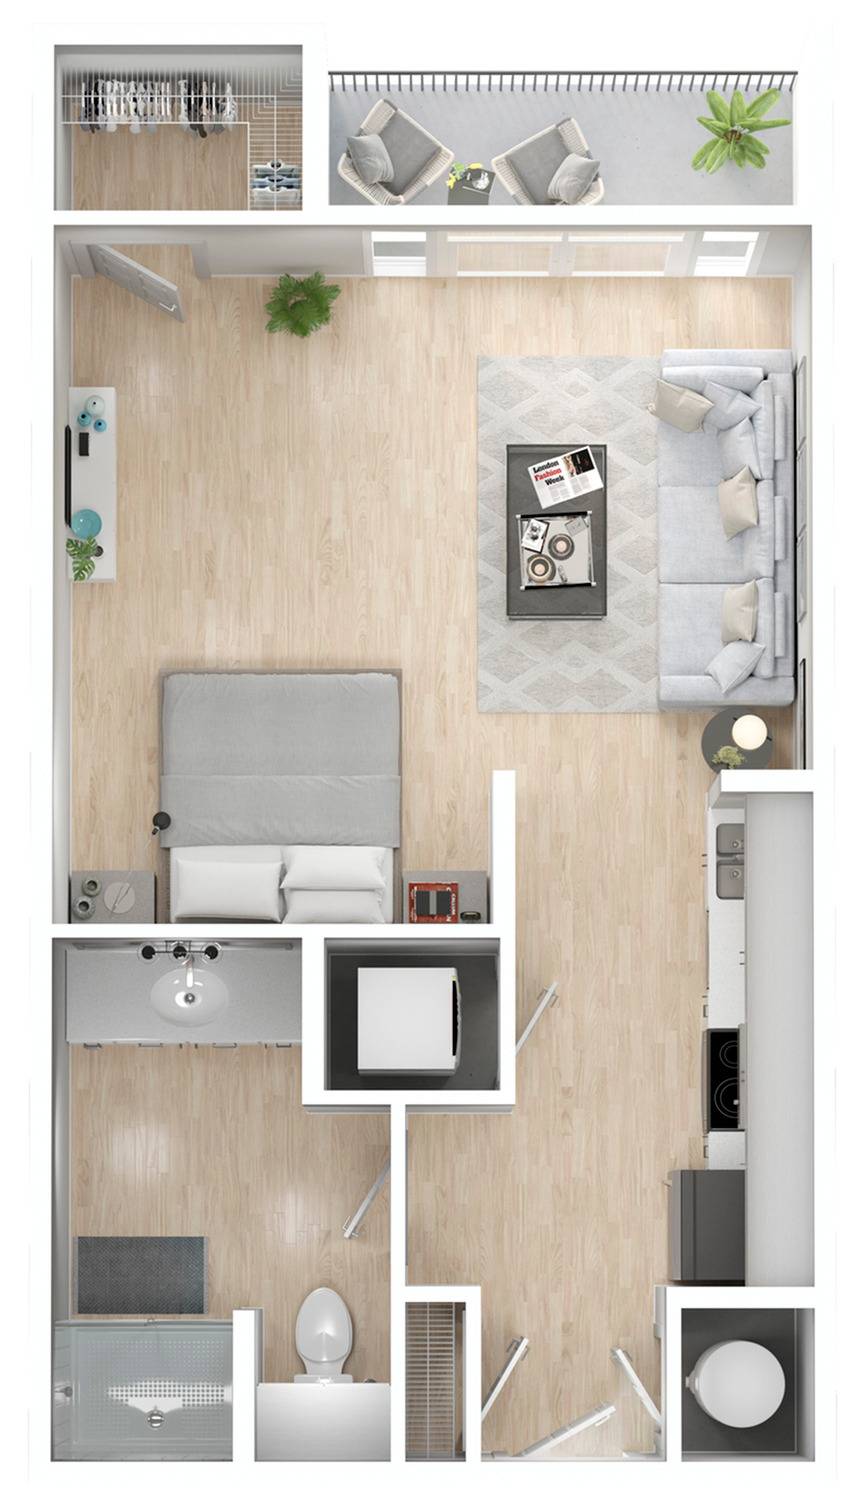 S2A Floor Plan Image